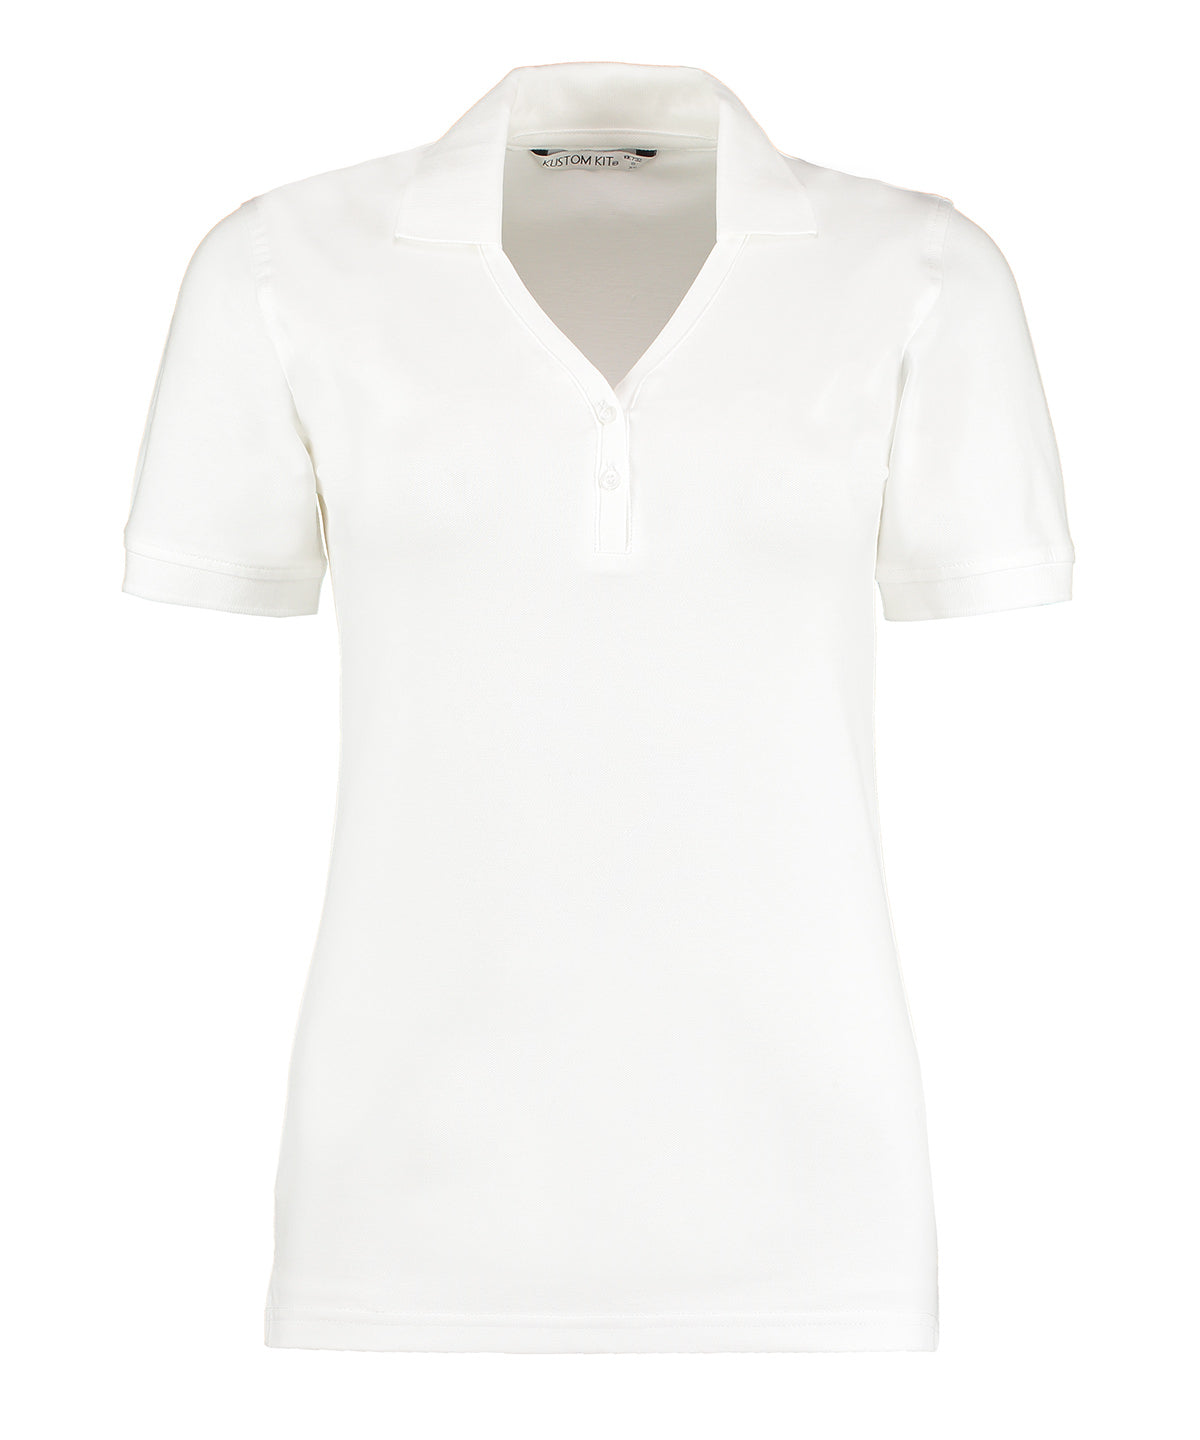 Personalised Polo Shirts - Black Kustom Kit Sophia v-neck polo (regular fit)